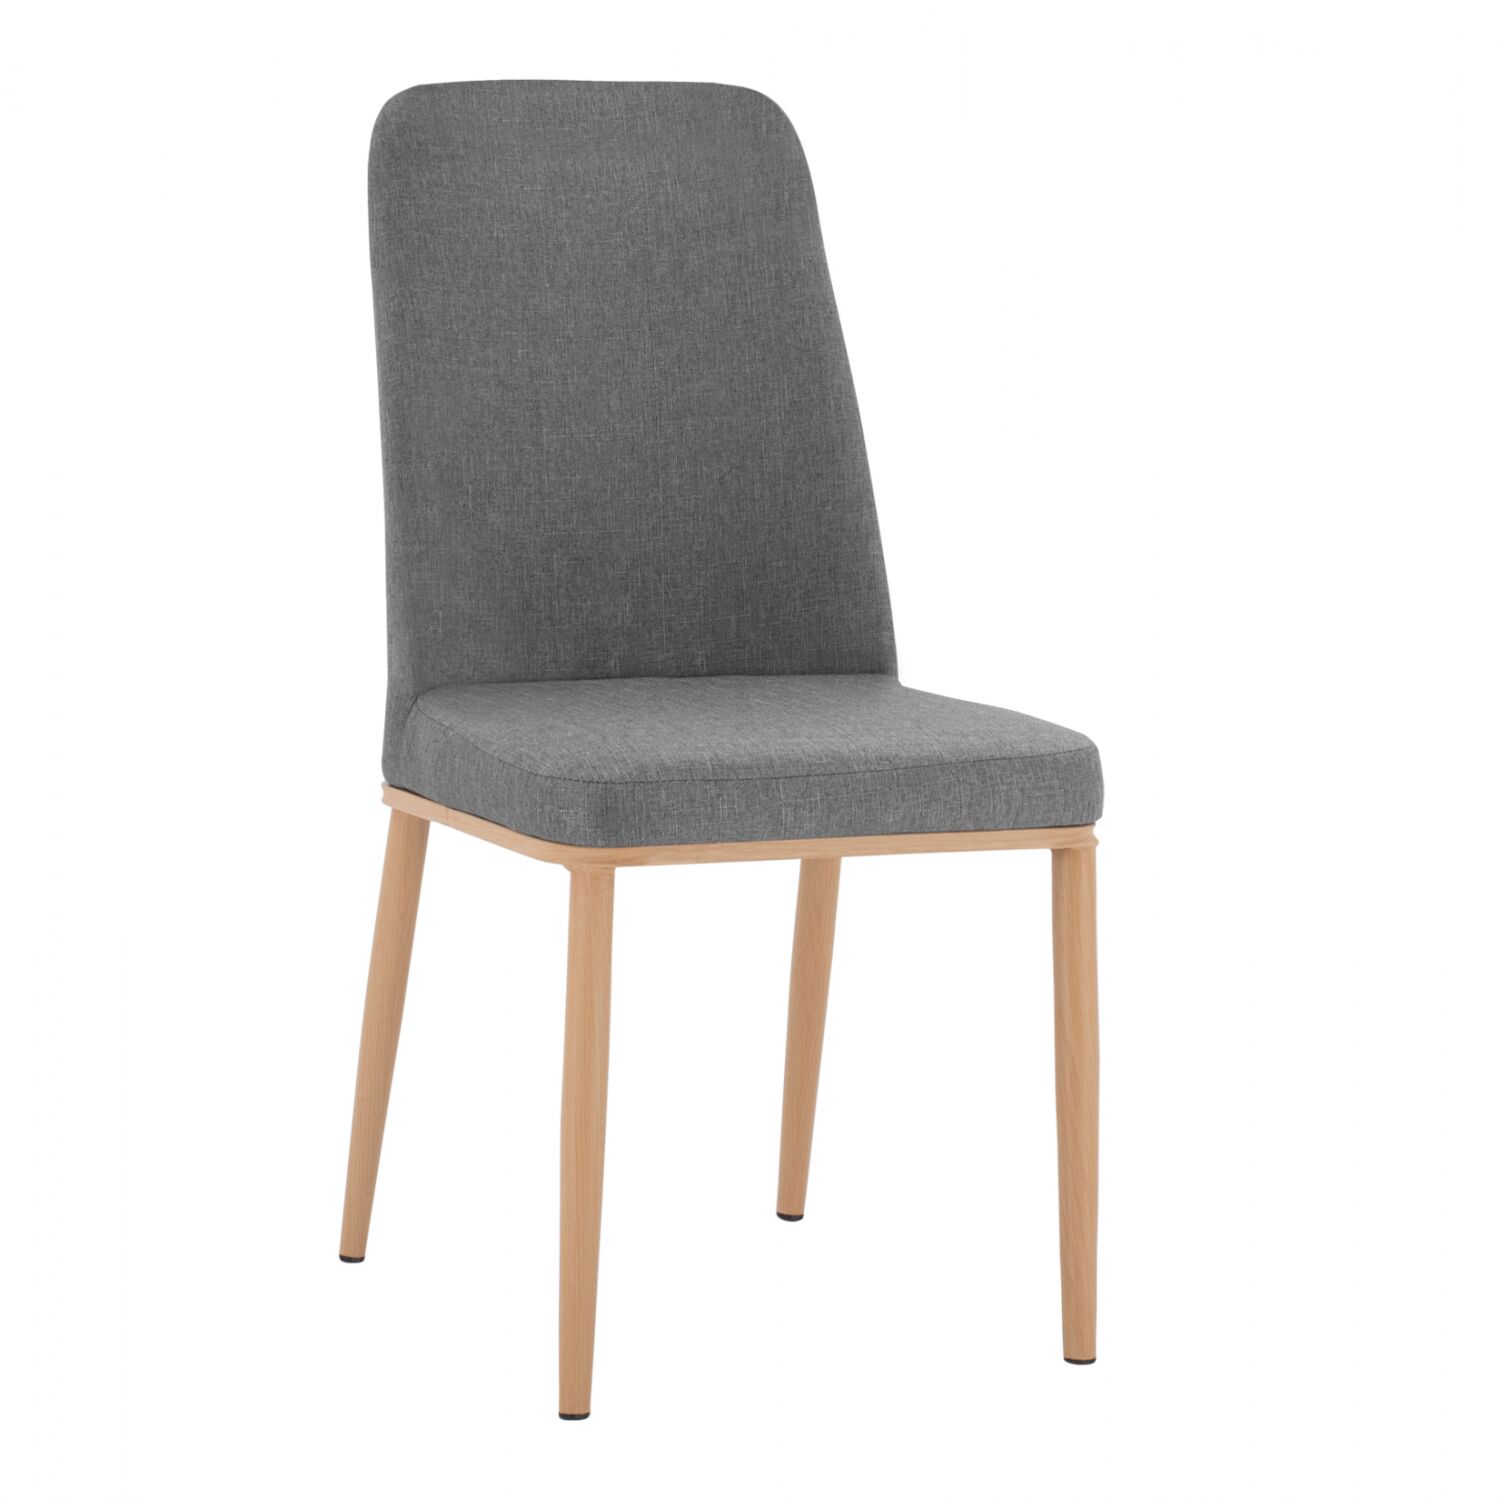 Dining Chair Eilish in grey fabric & metallic frame HM8727.01 43X55X92